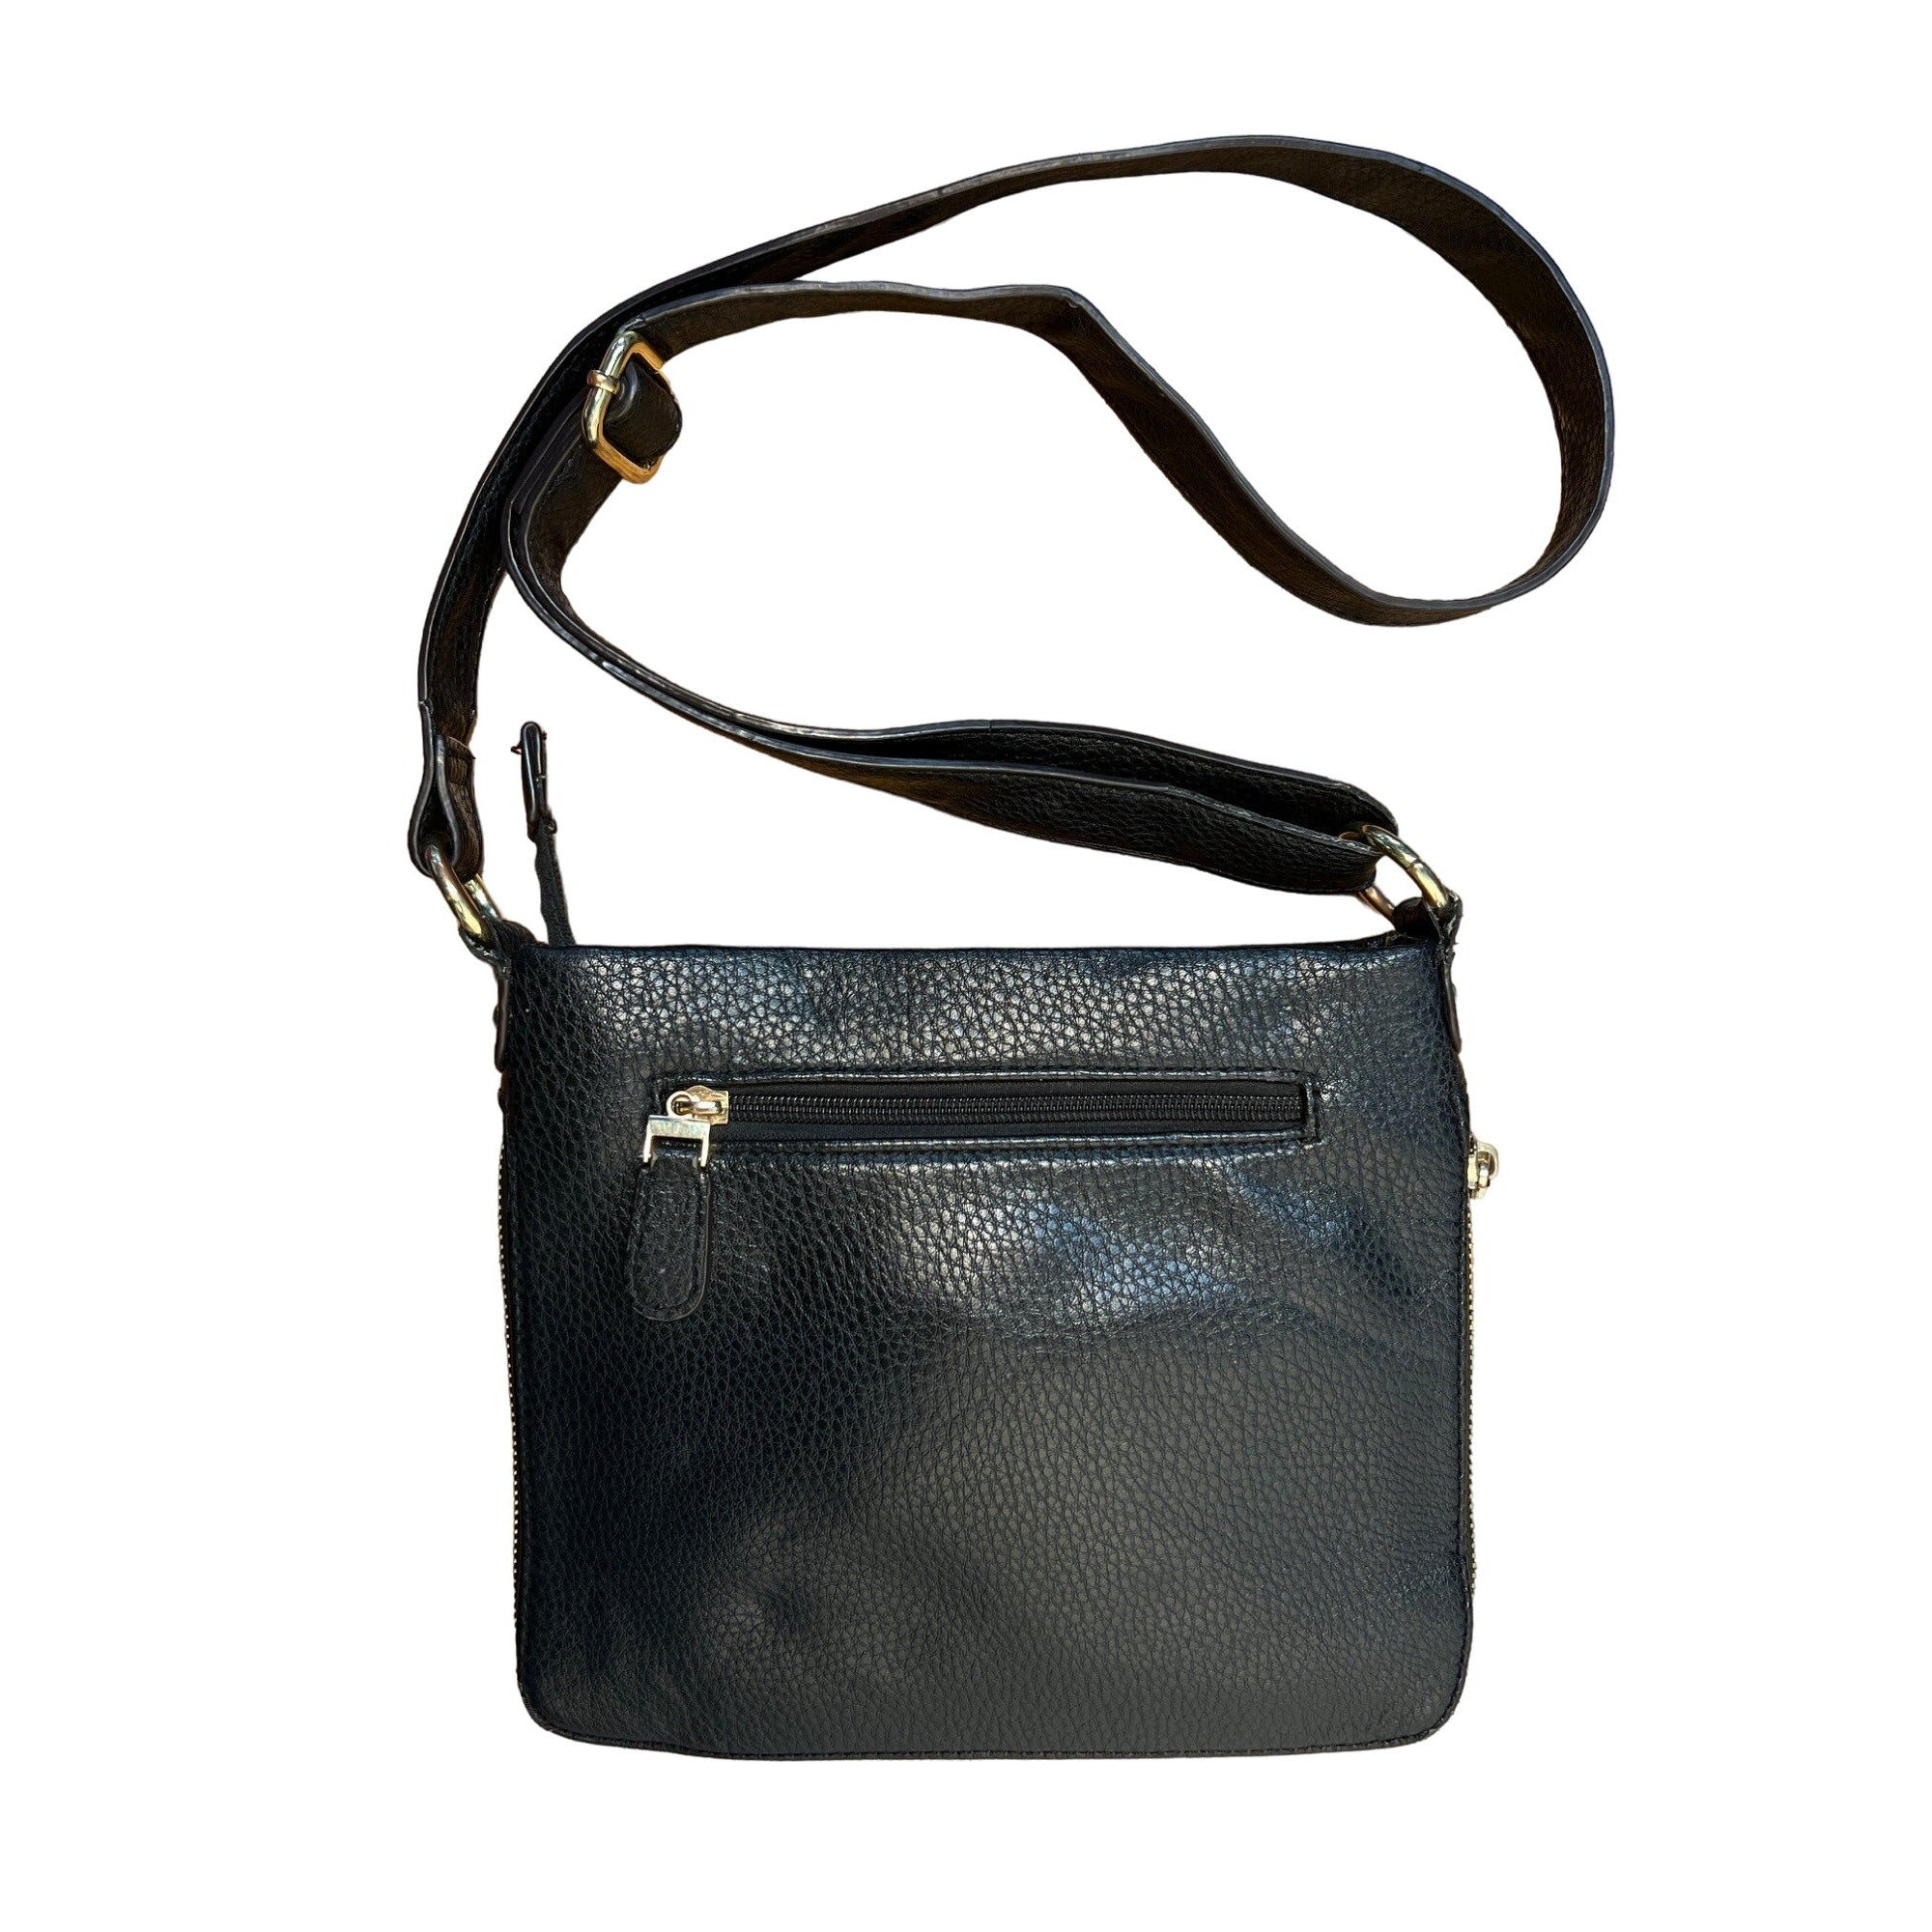 Shop Anne Klein Bags online | Lazada.com.ph